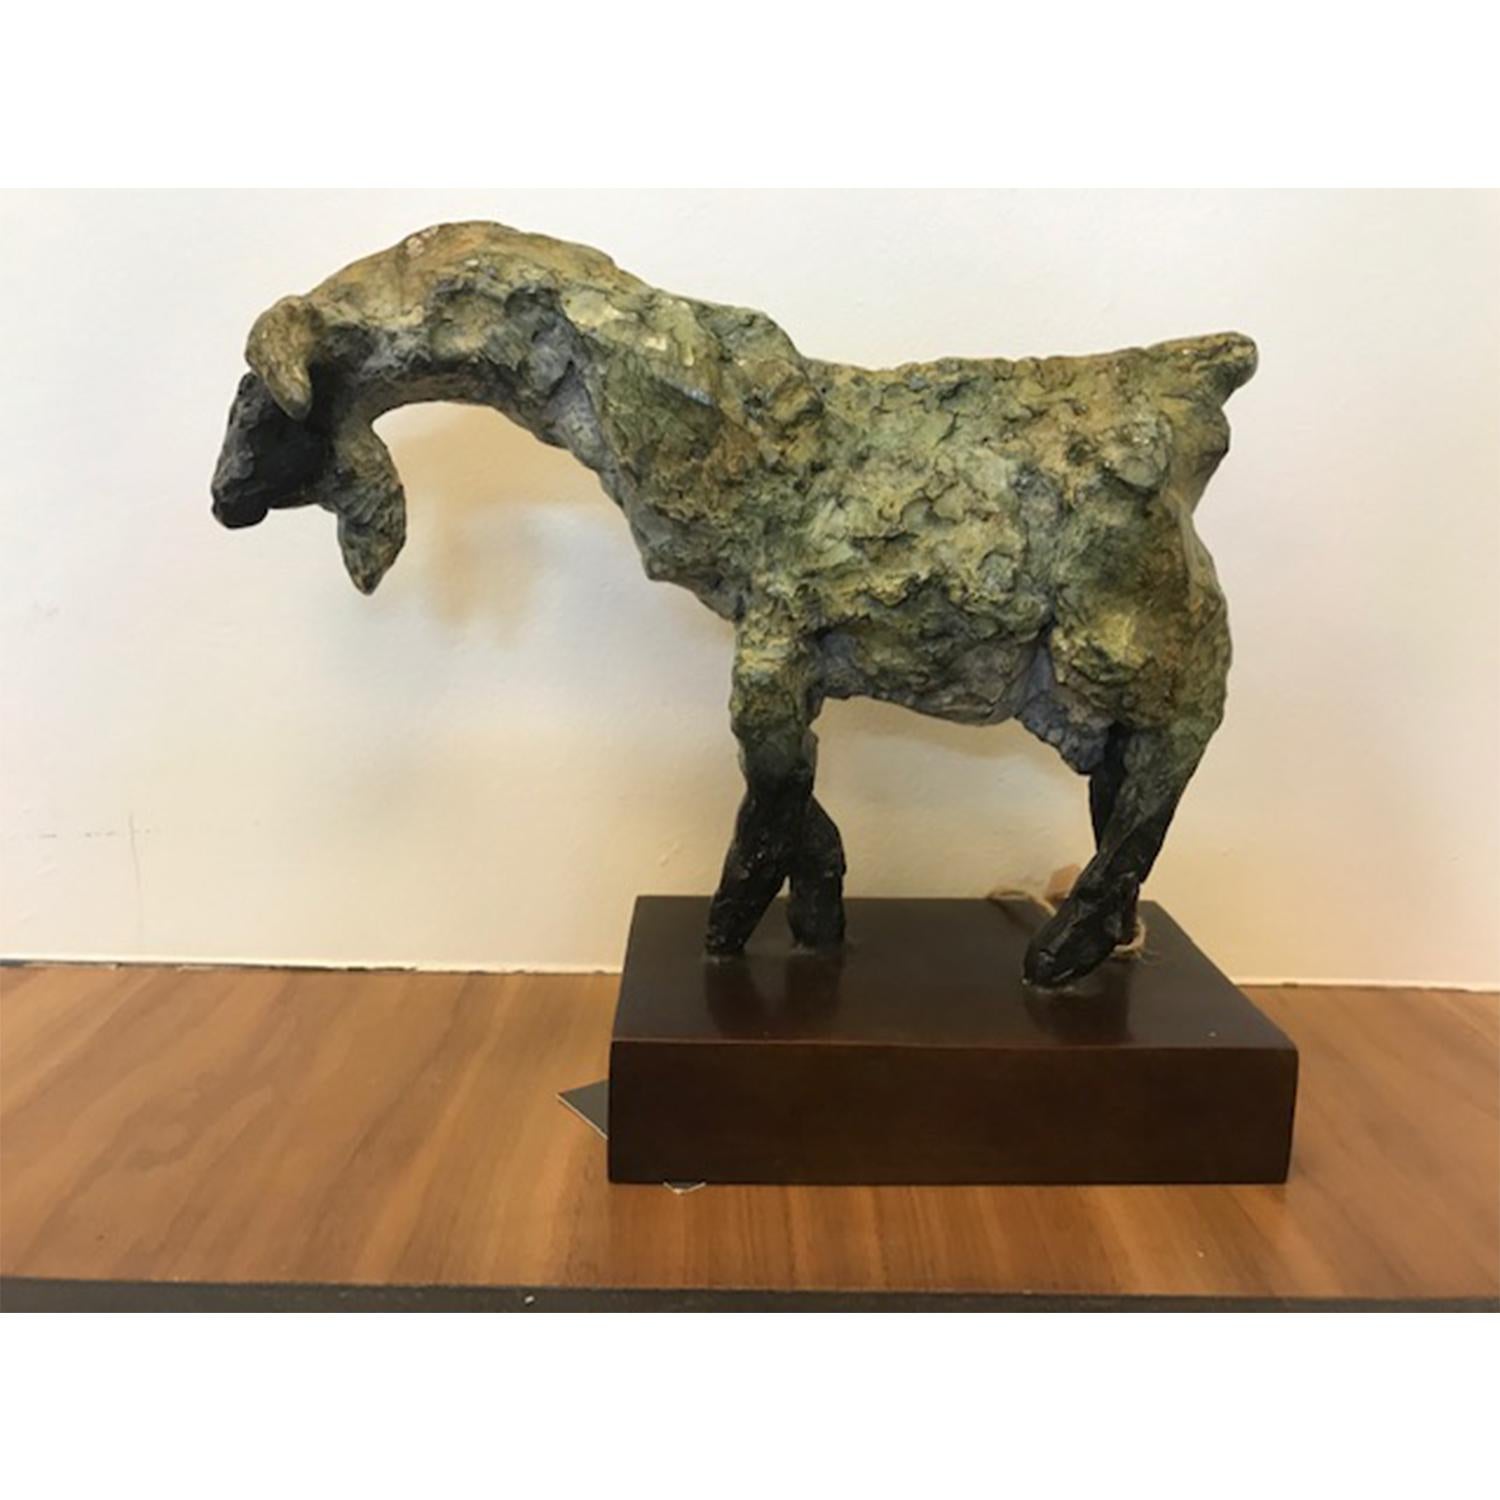 Goat Small - Sculpture by Copper Tritscheller